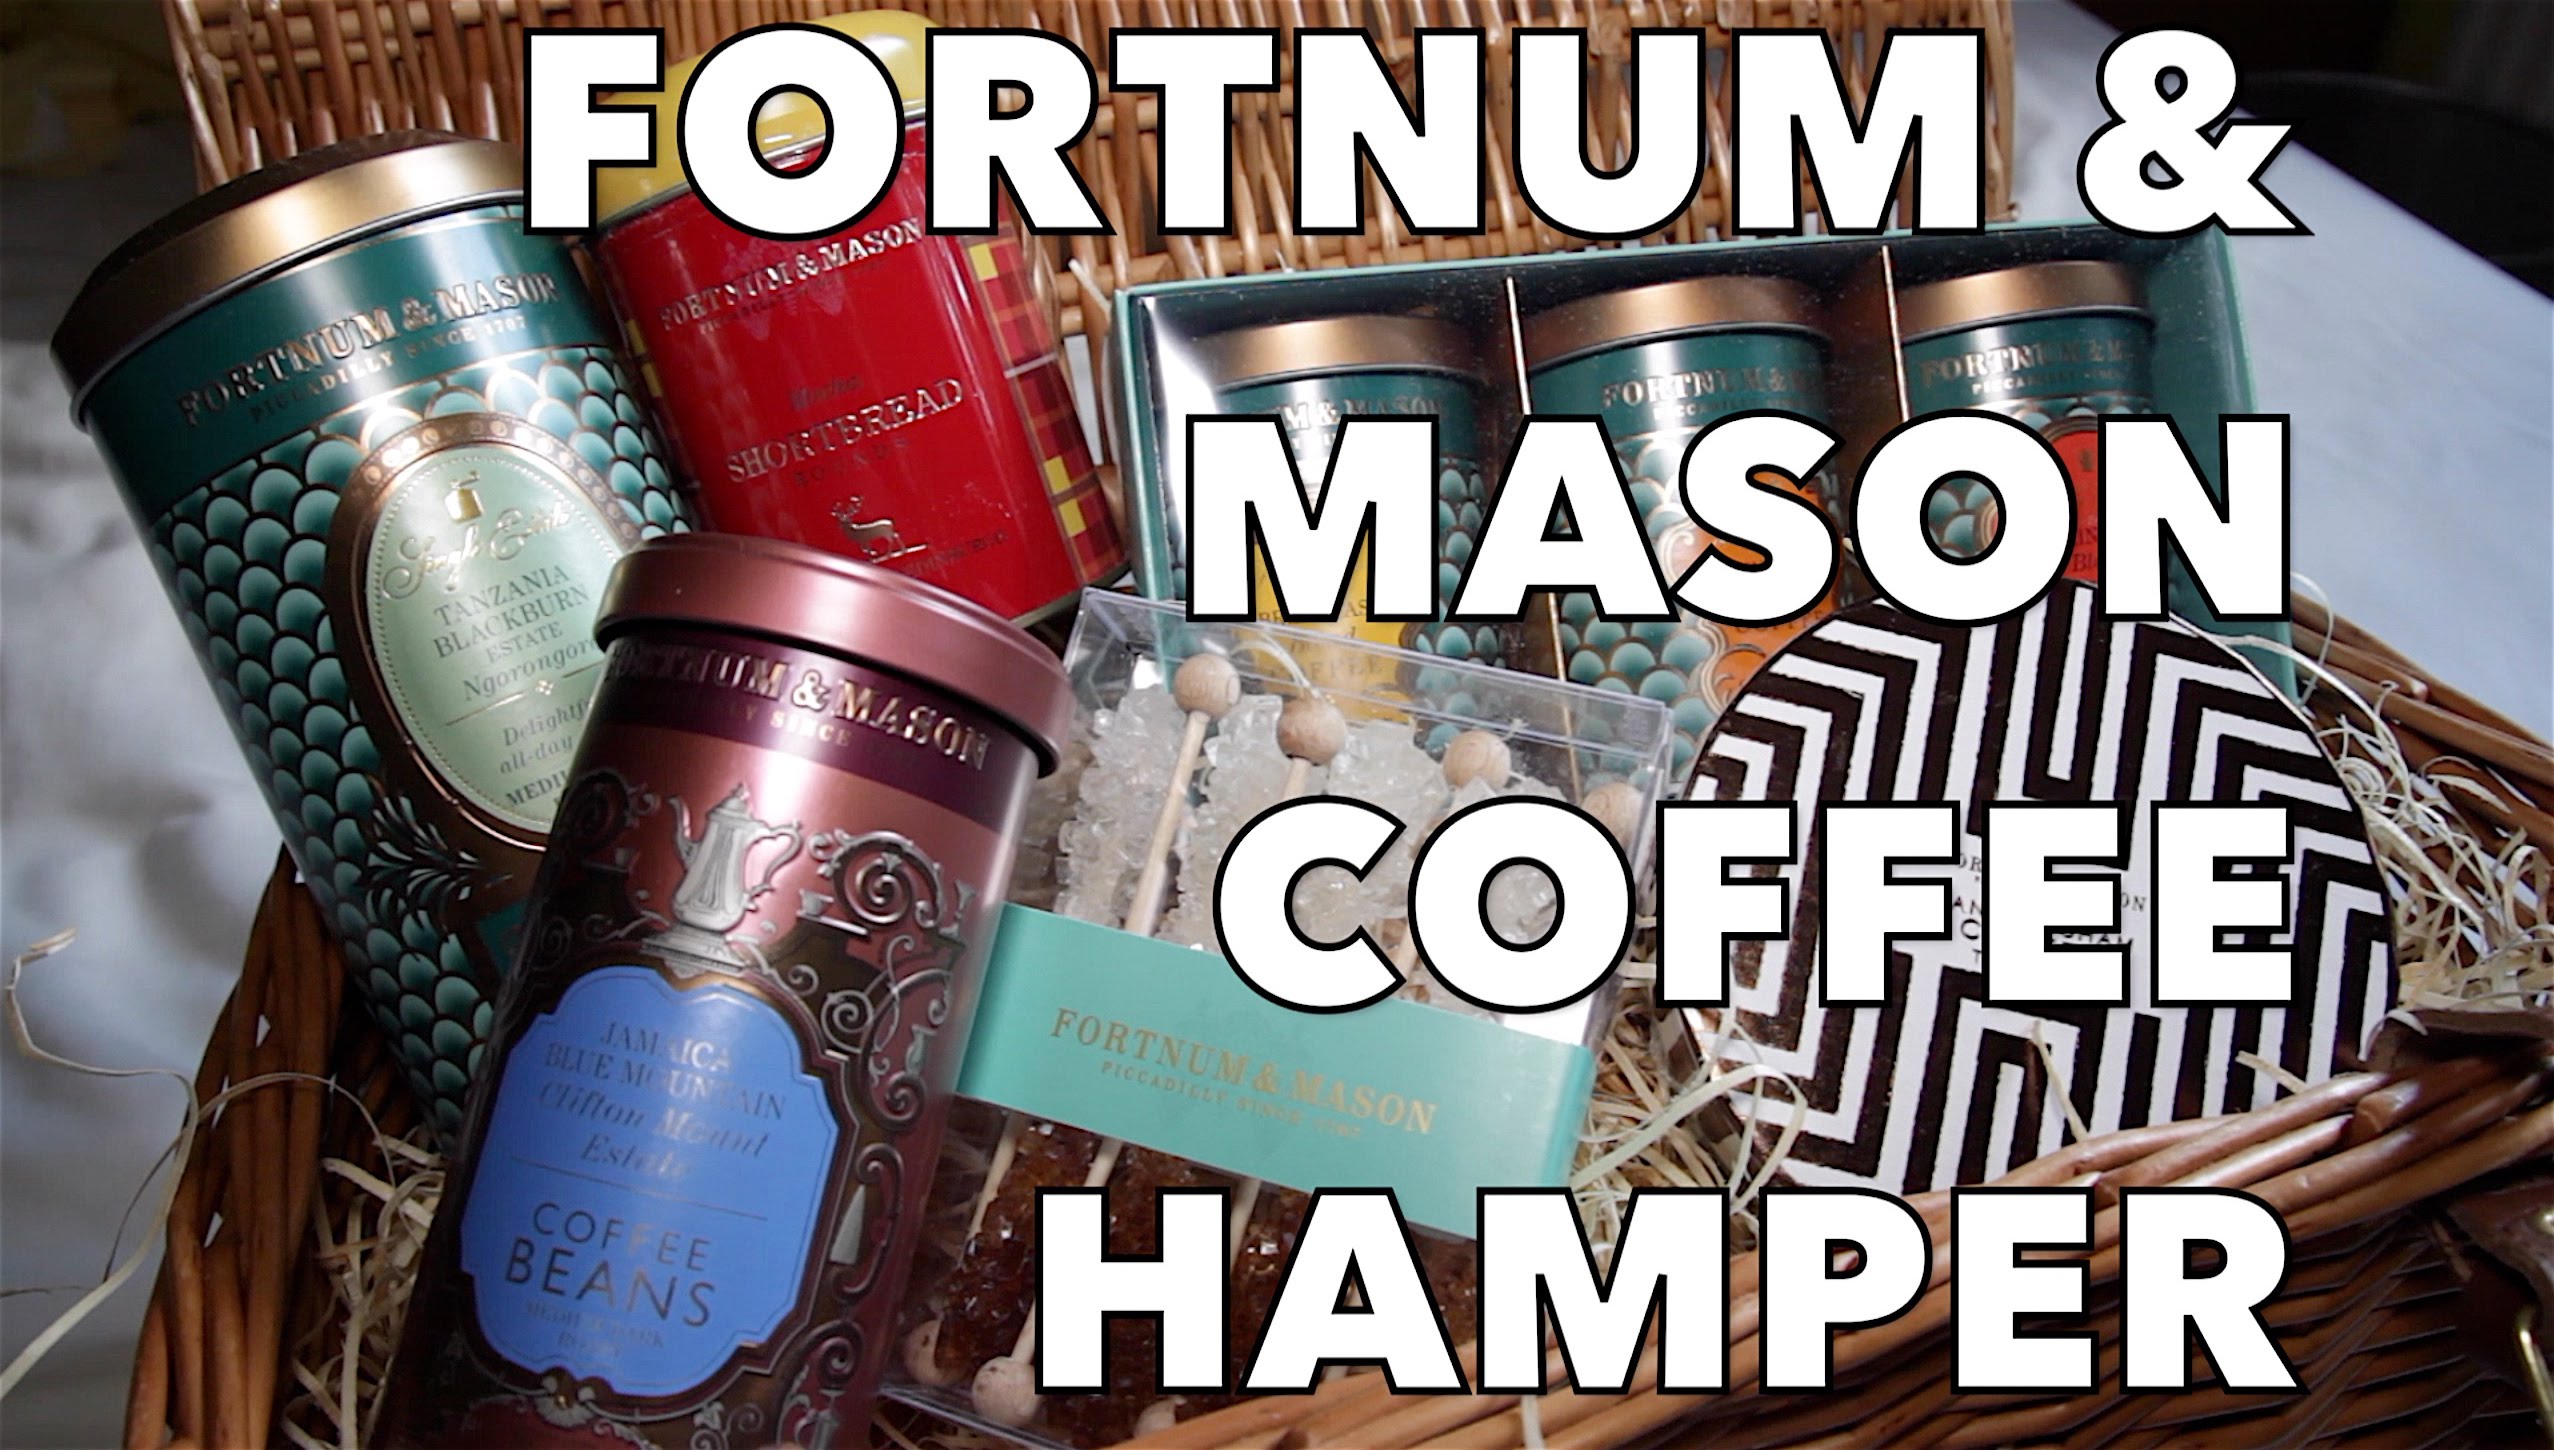 Fortnum & Mason Coffee House Hamper Review